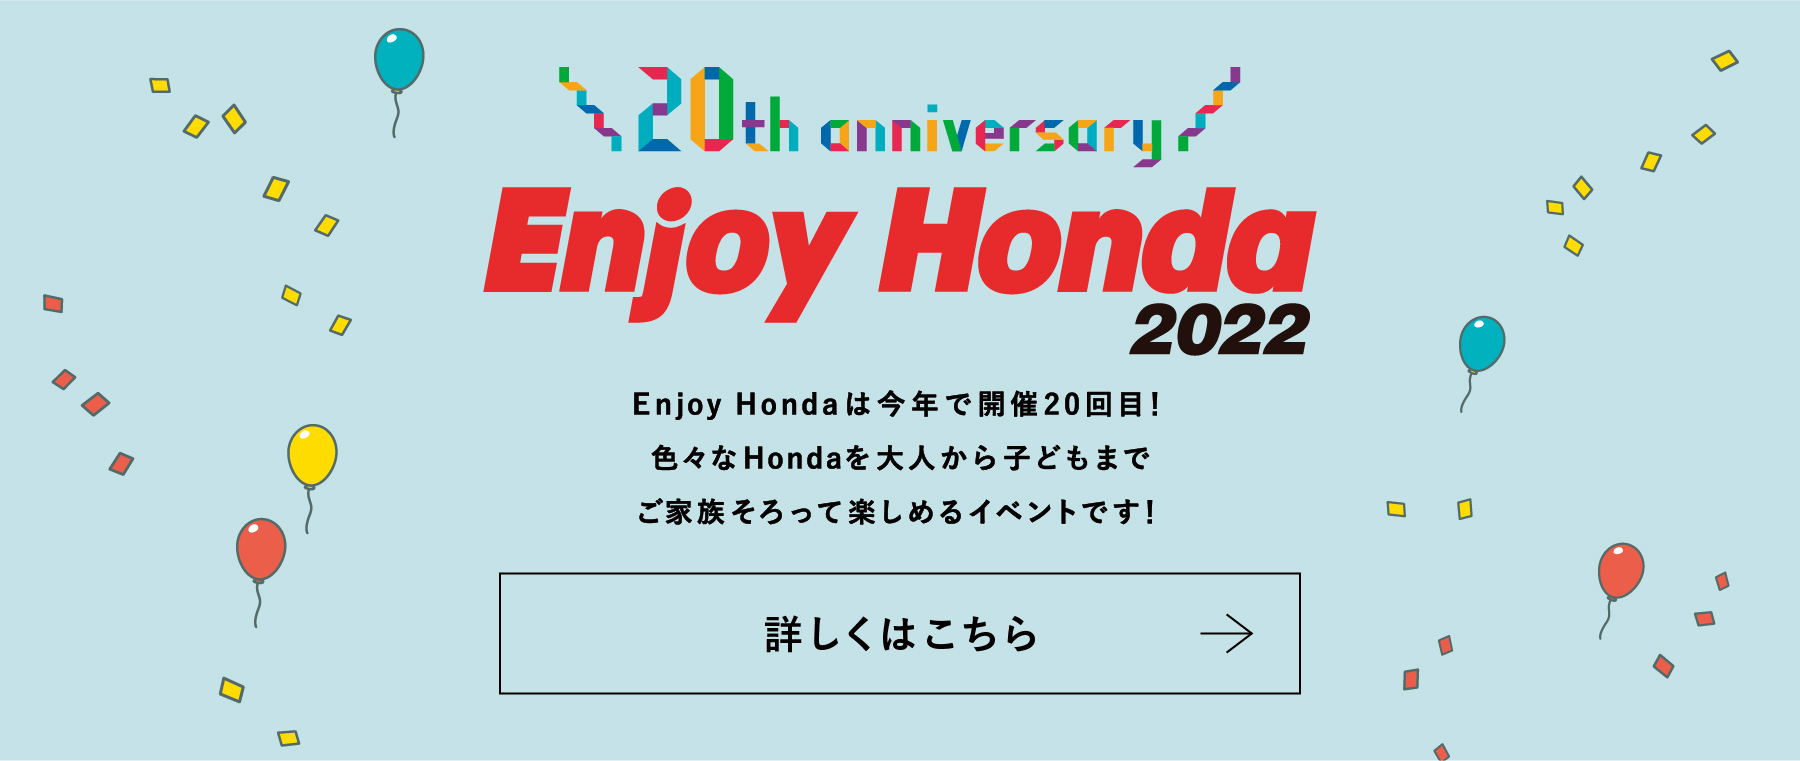 Enjoy Honda 2022